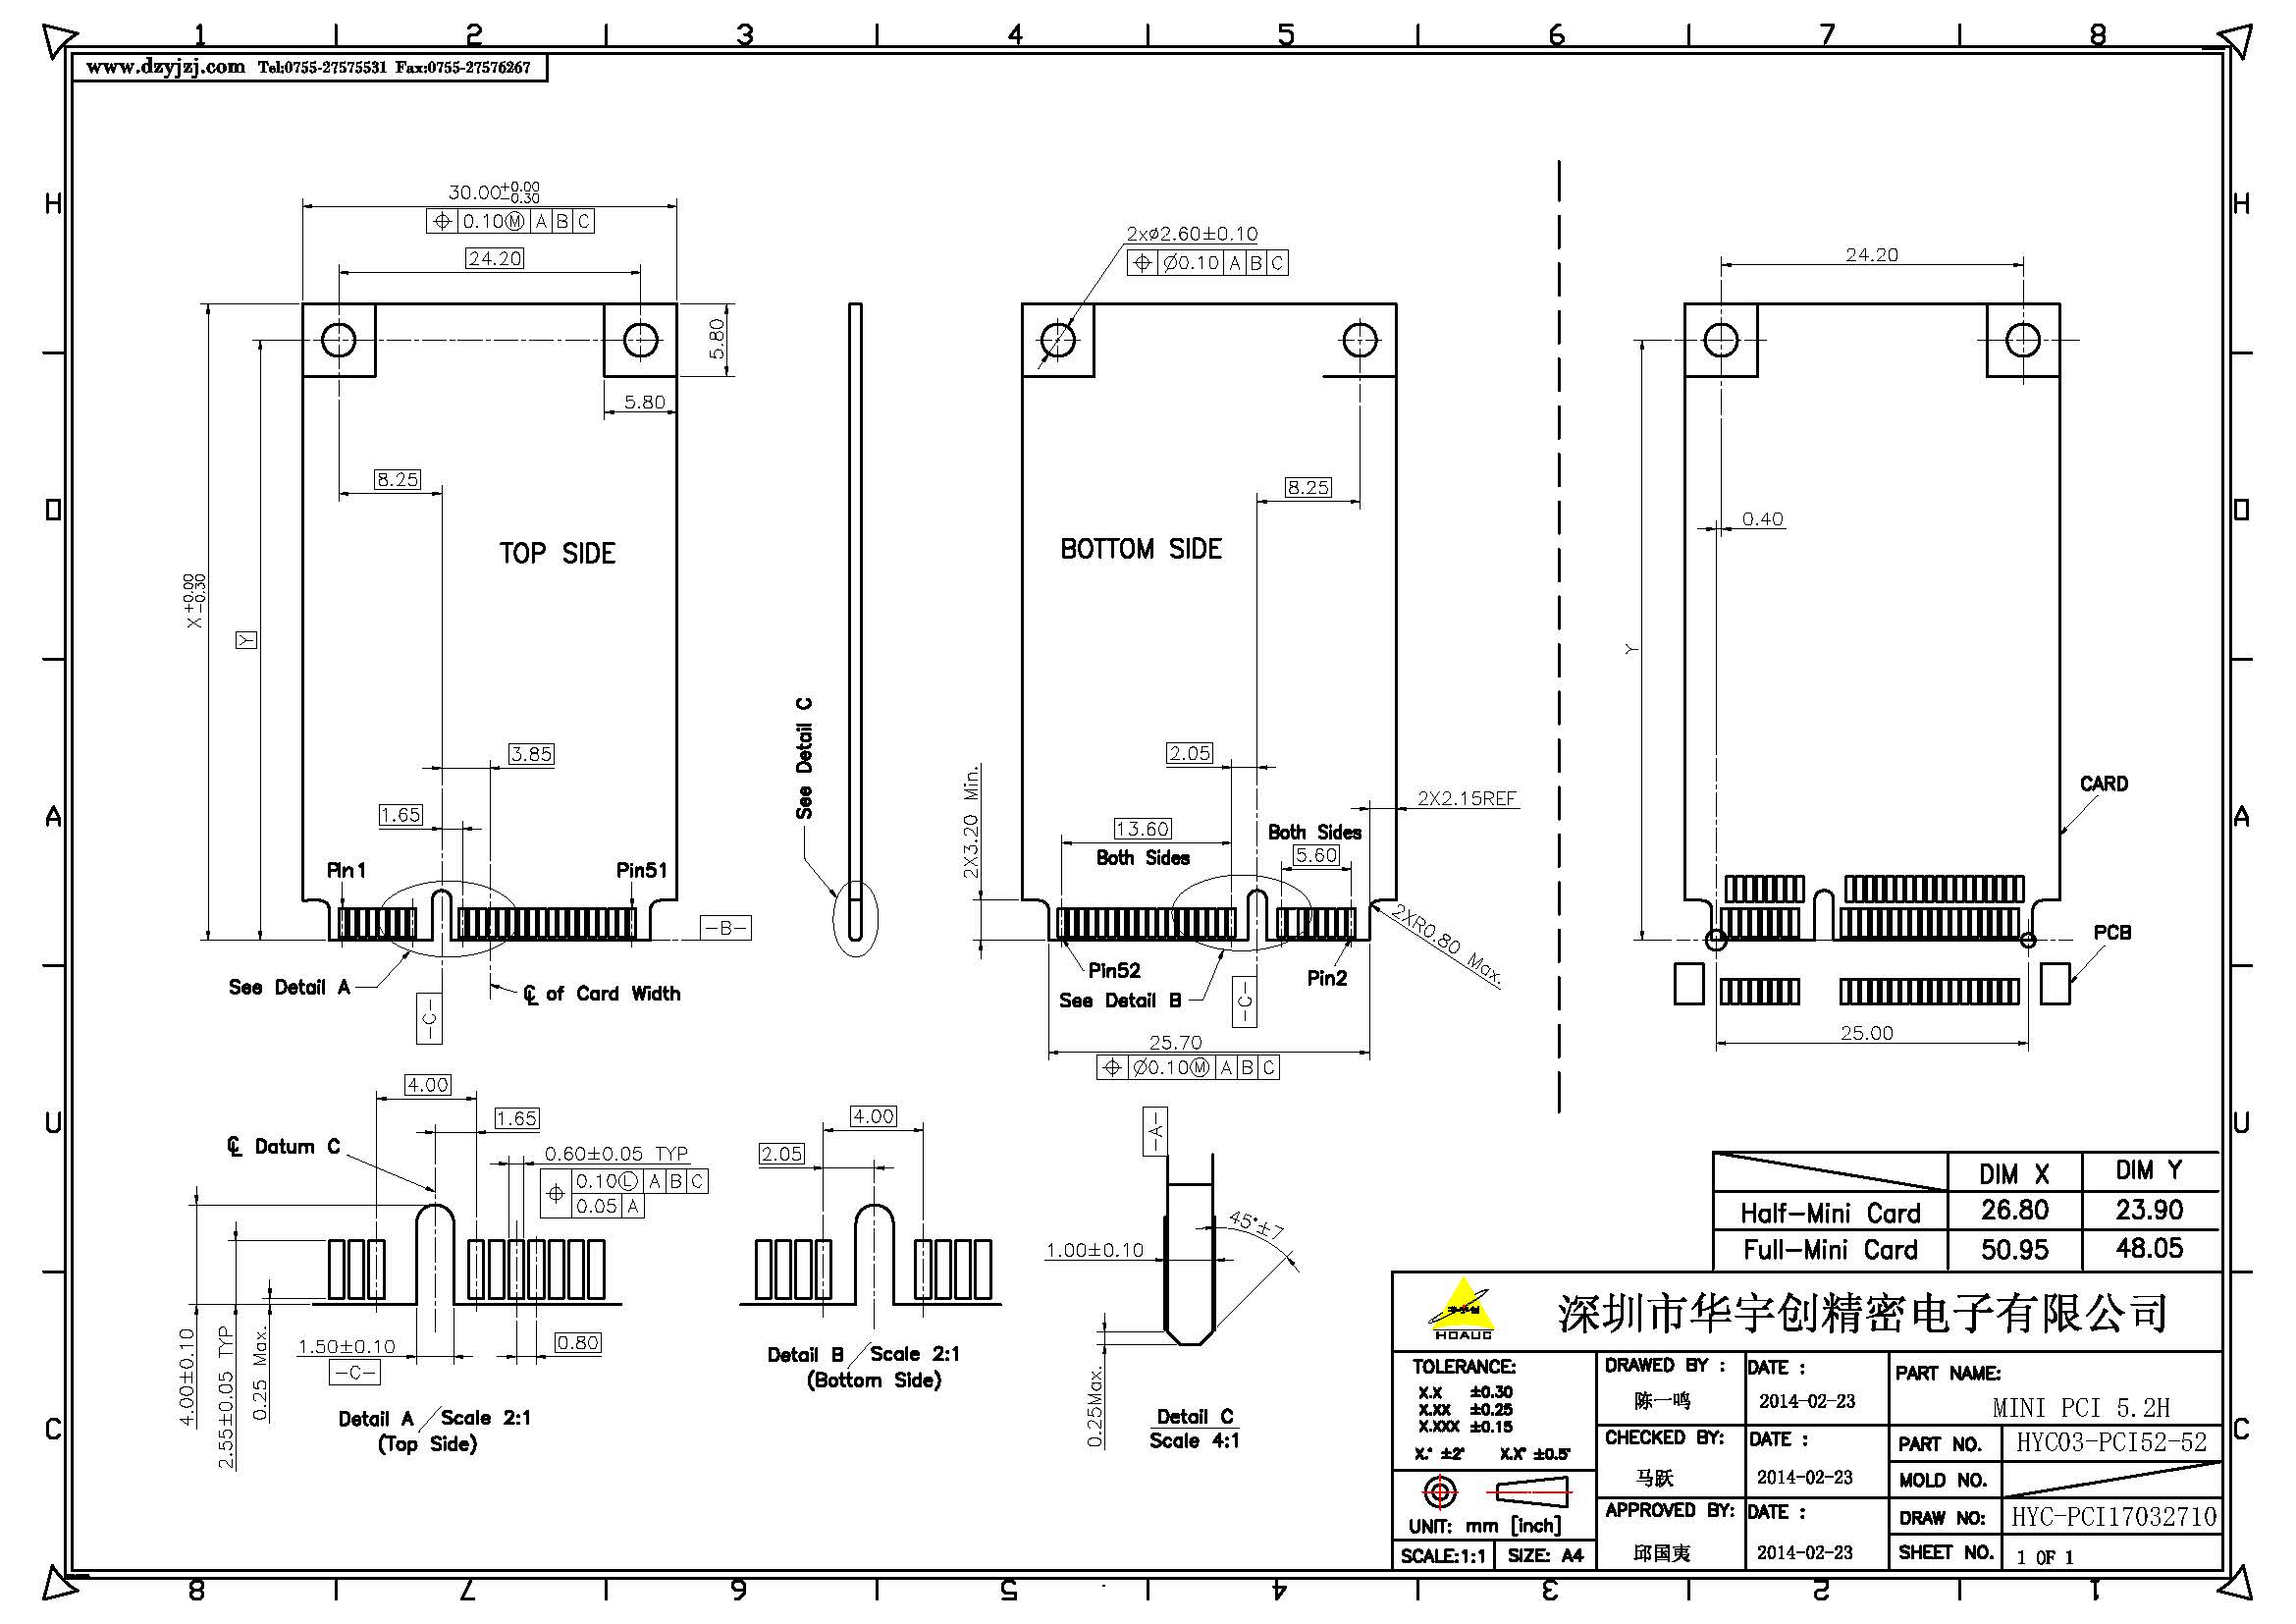 MINI PCI 5.2H产品图_页面_3.jpg